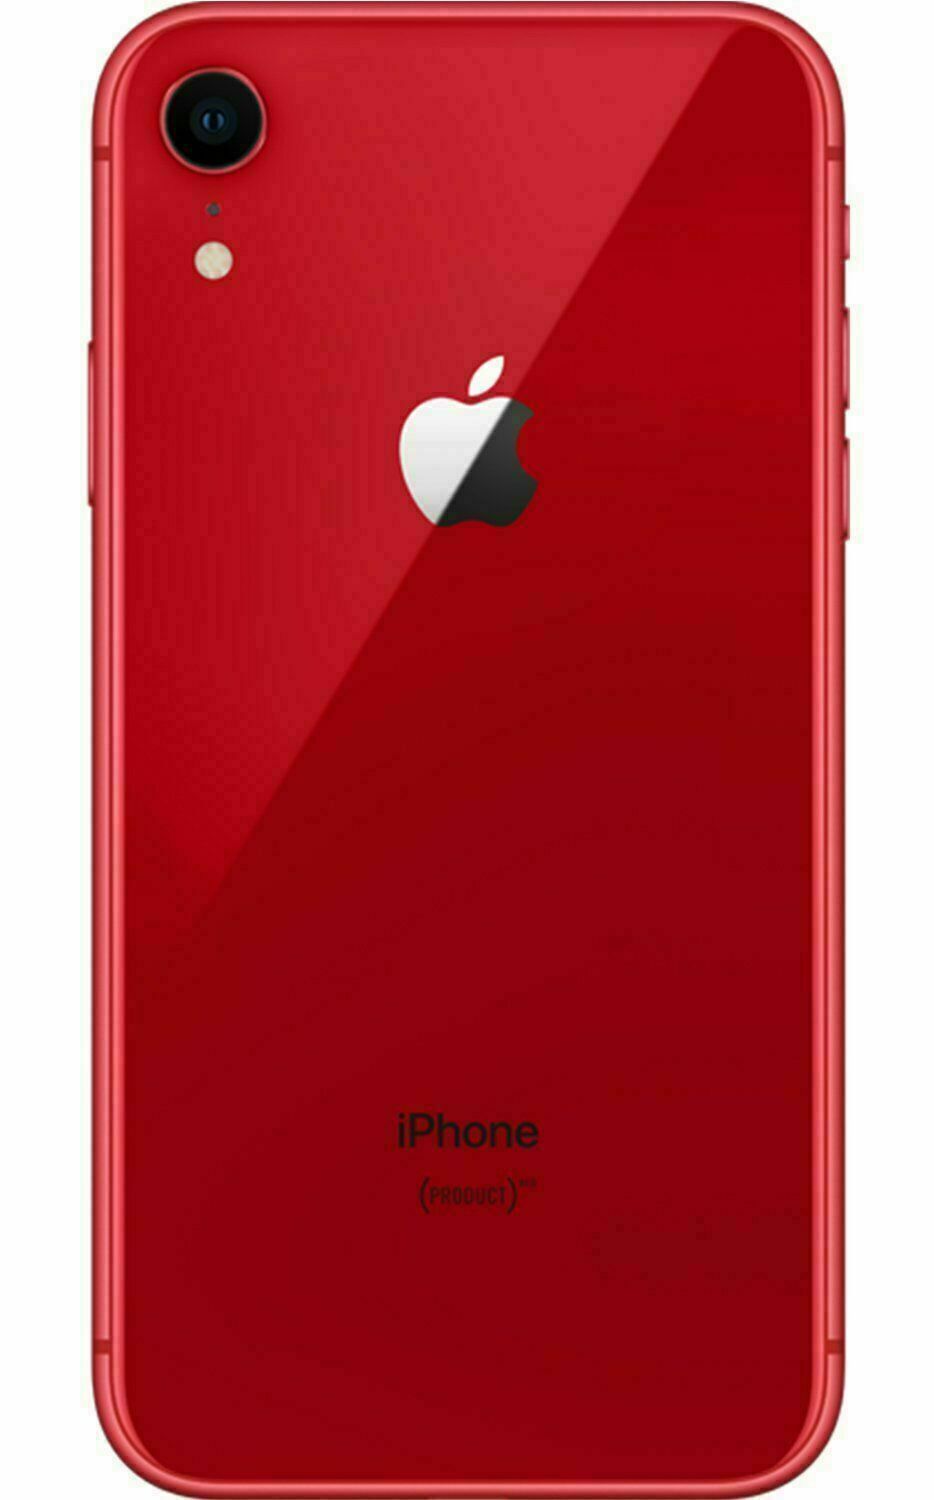 Apple iPhone XR 128GB Fully Unlocked Good Condition | eBay